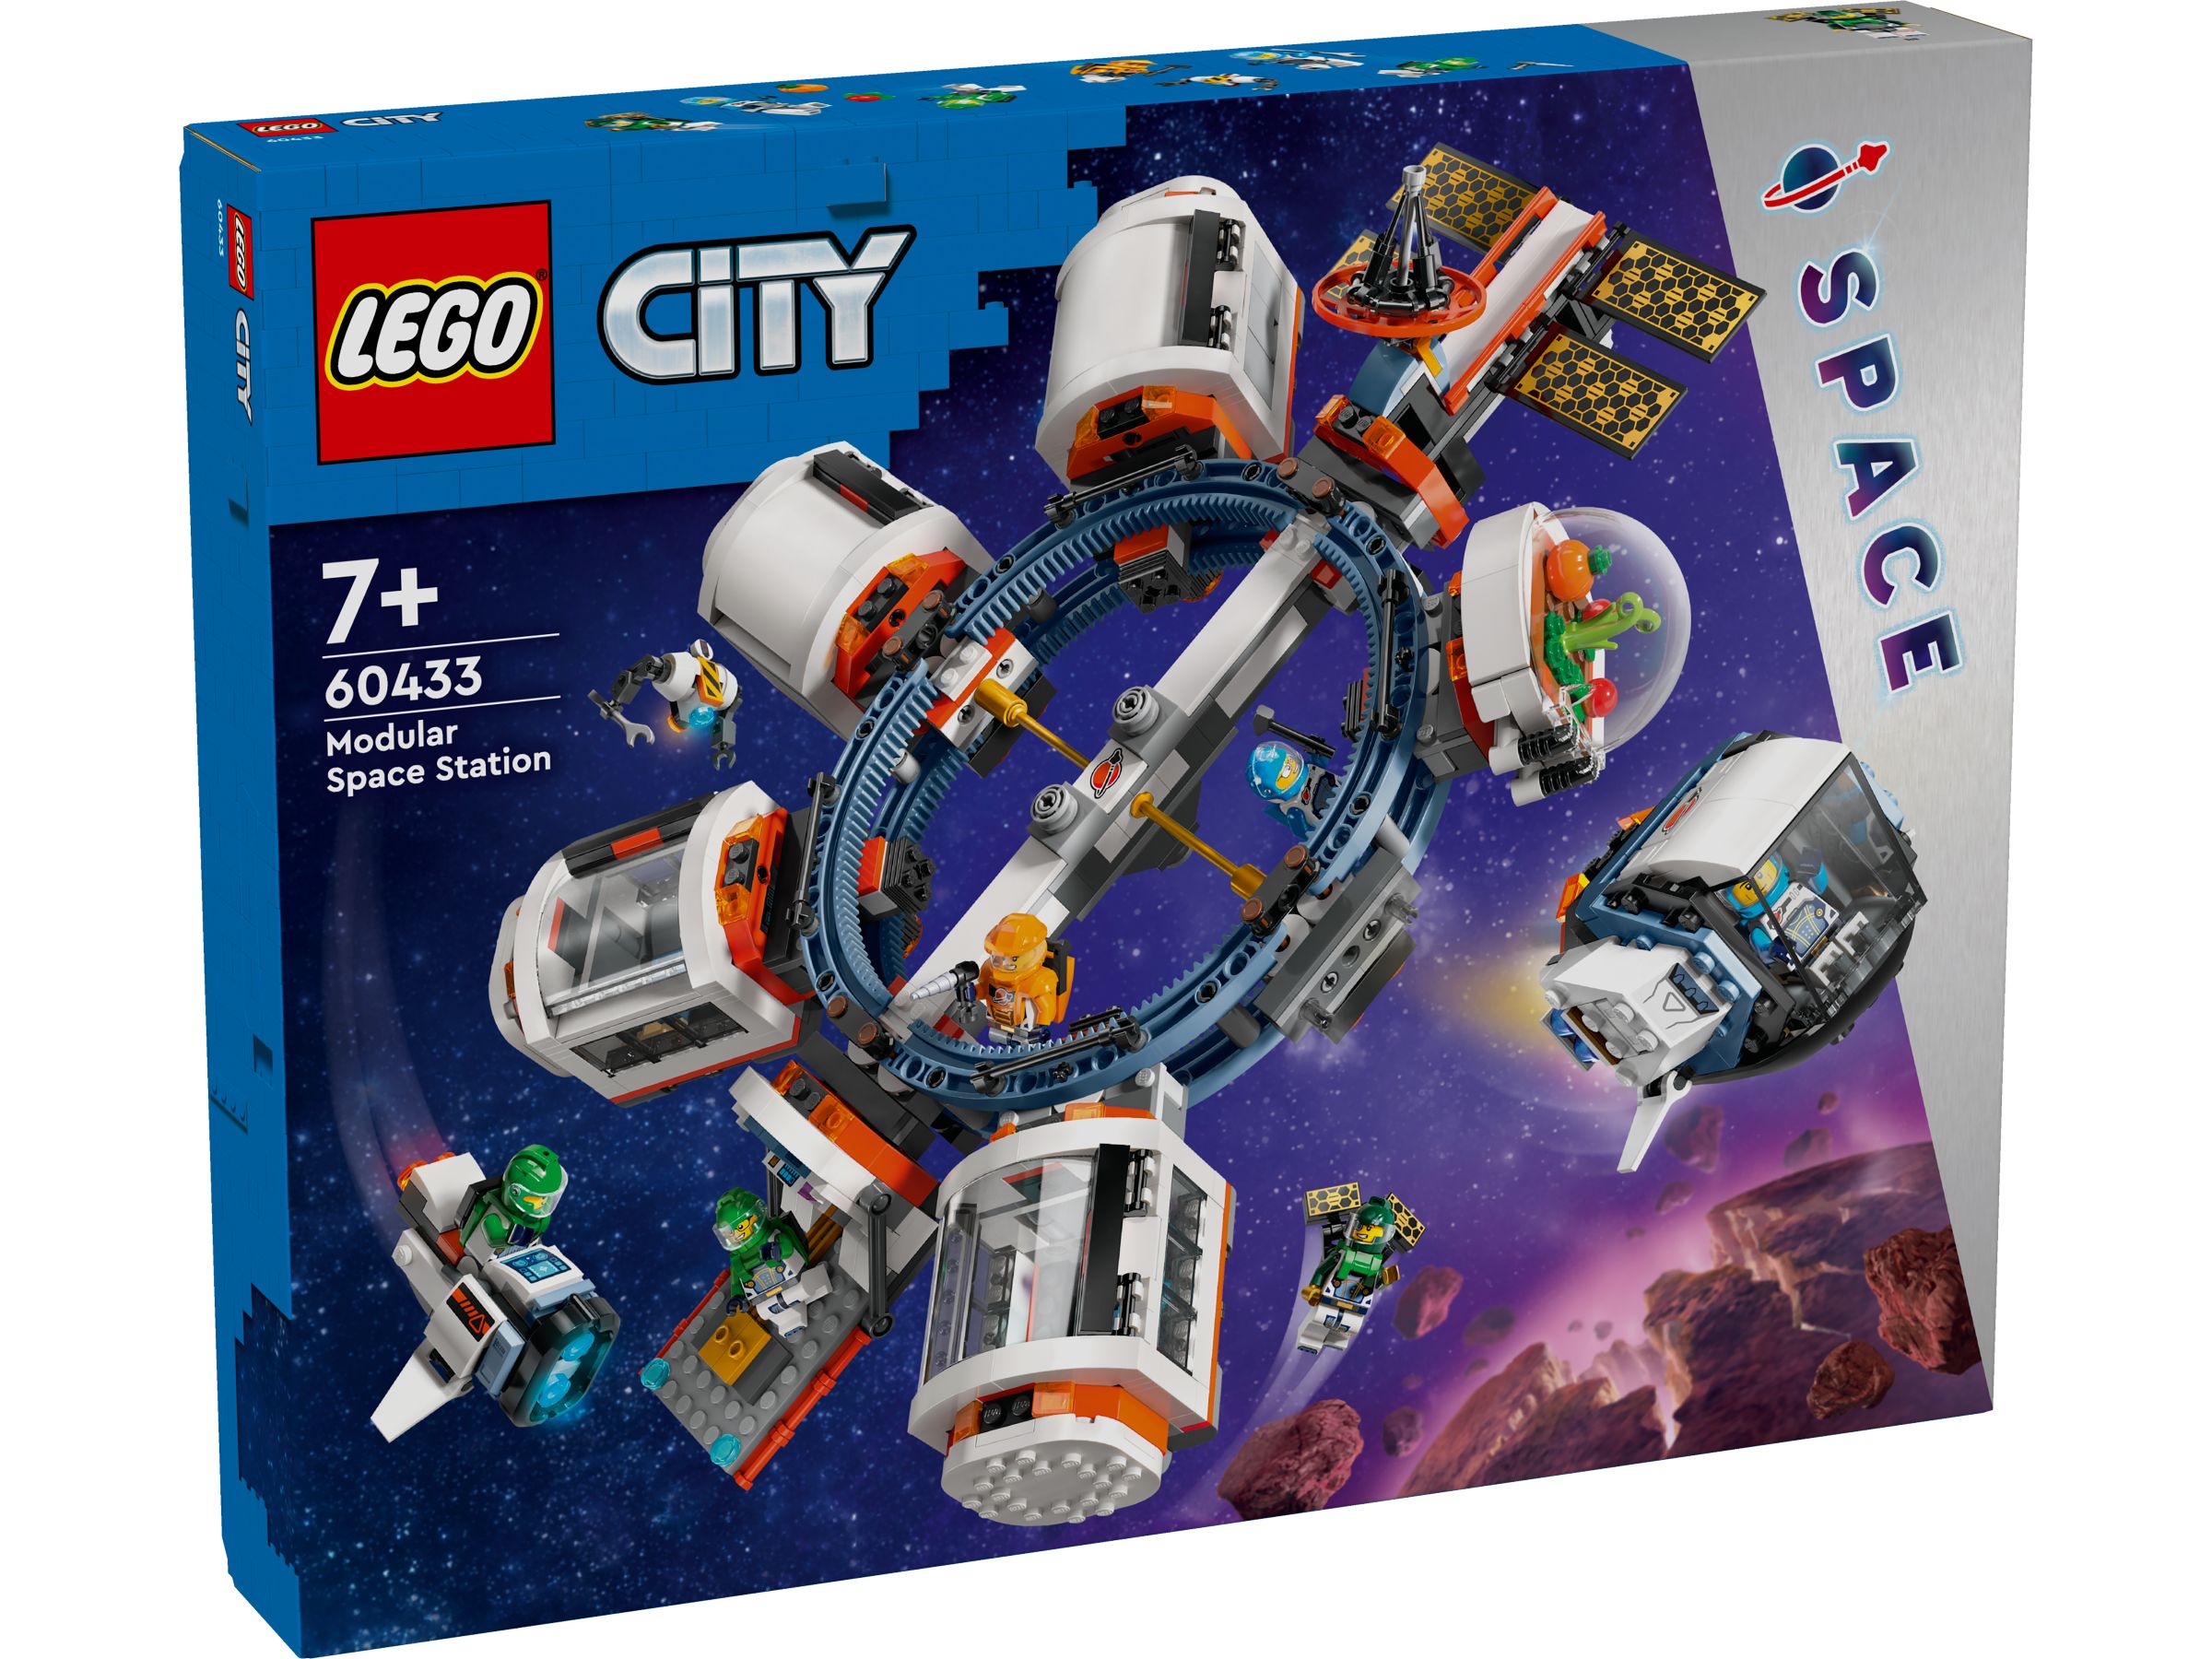 LEGO City 60433 Modulare Raumstation LEGO_60433_Box1_v29.jpg